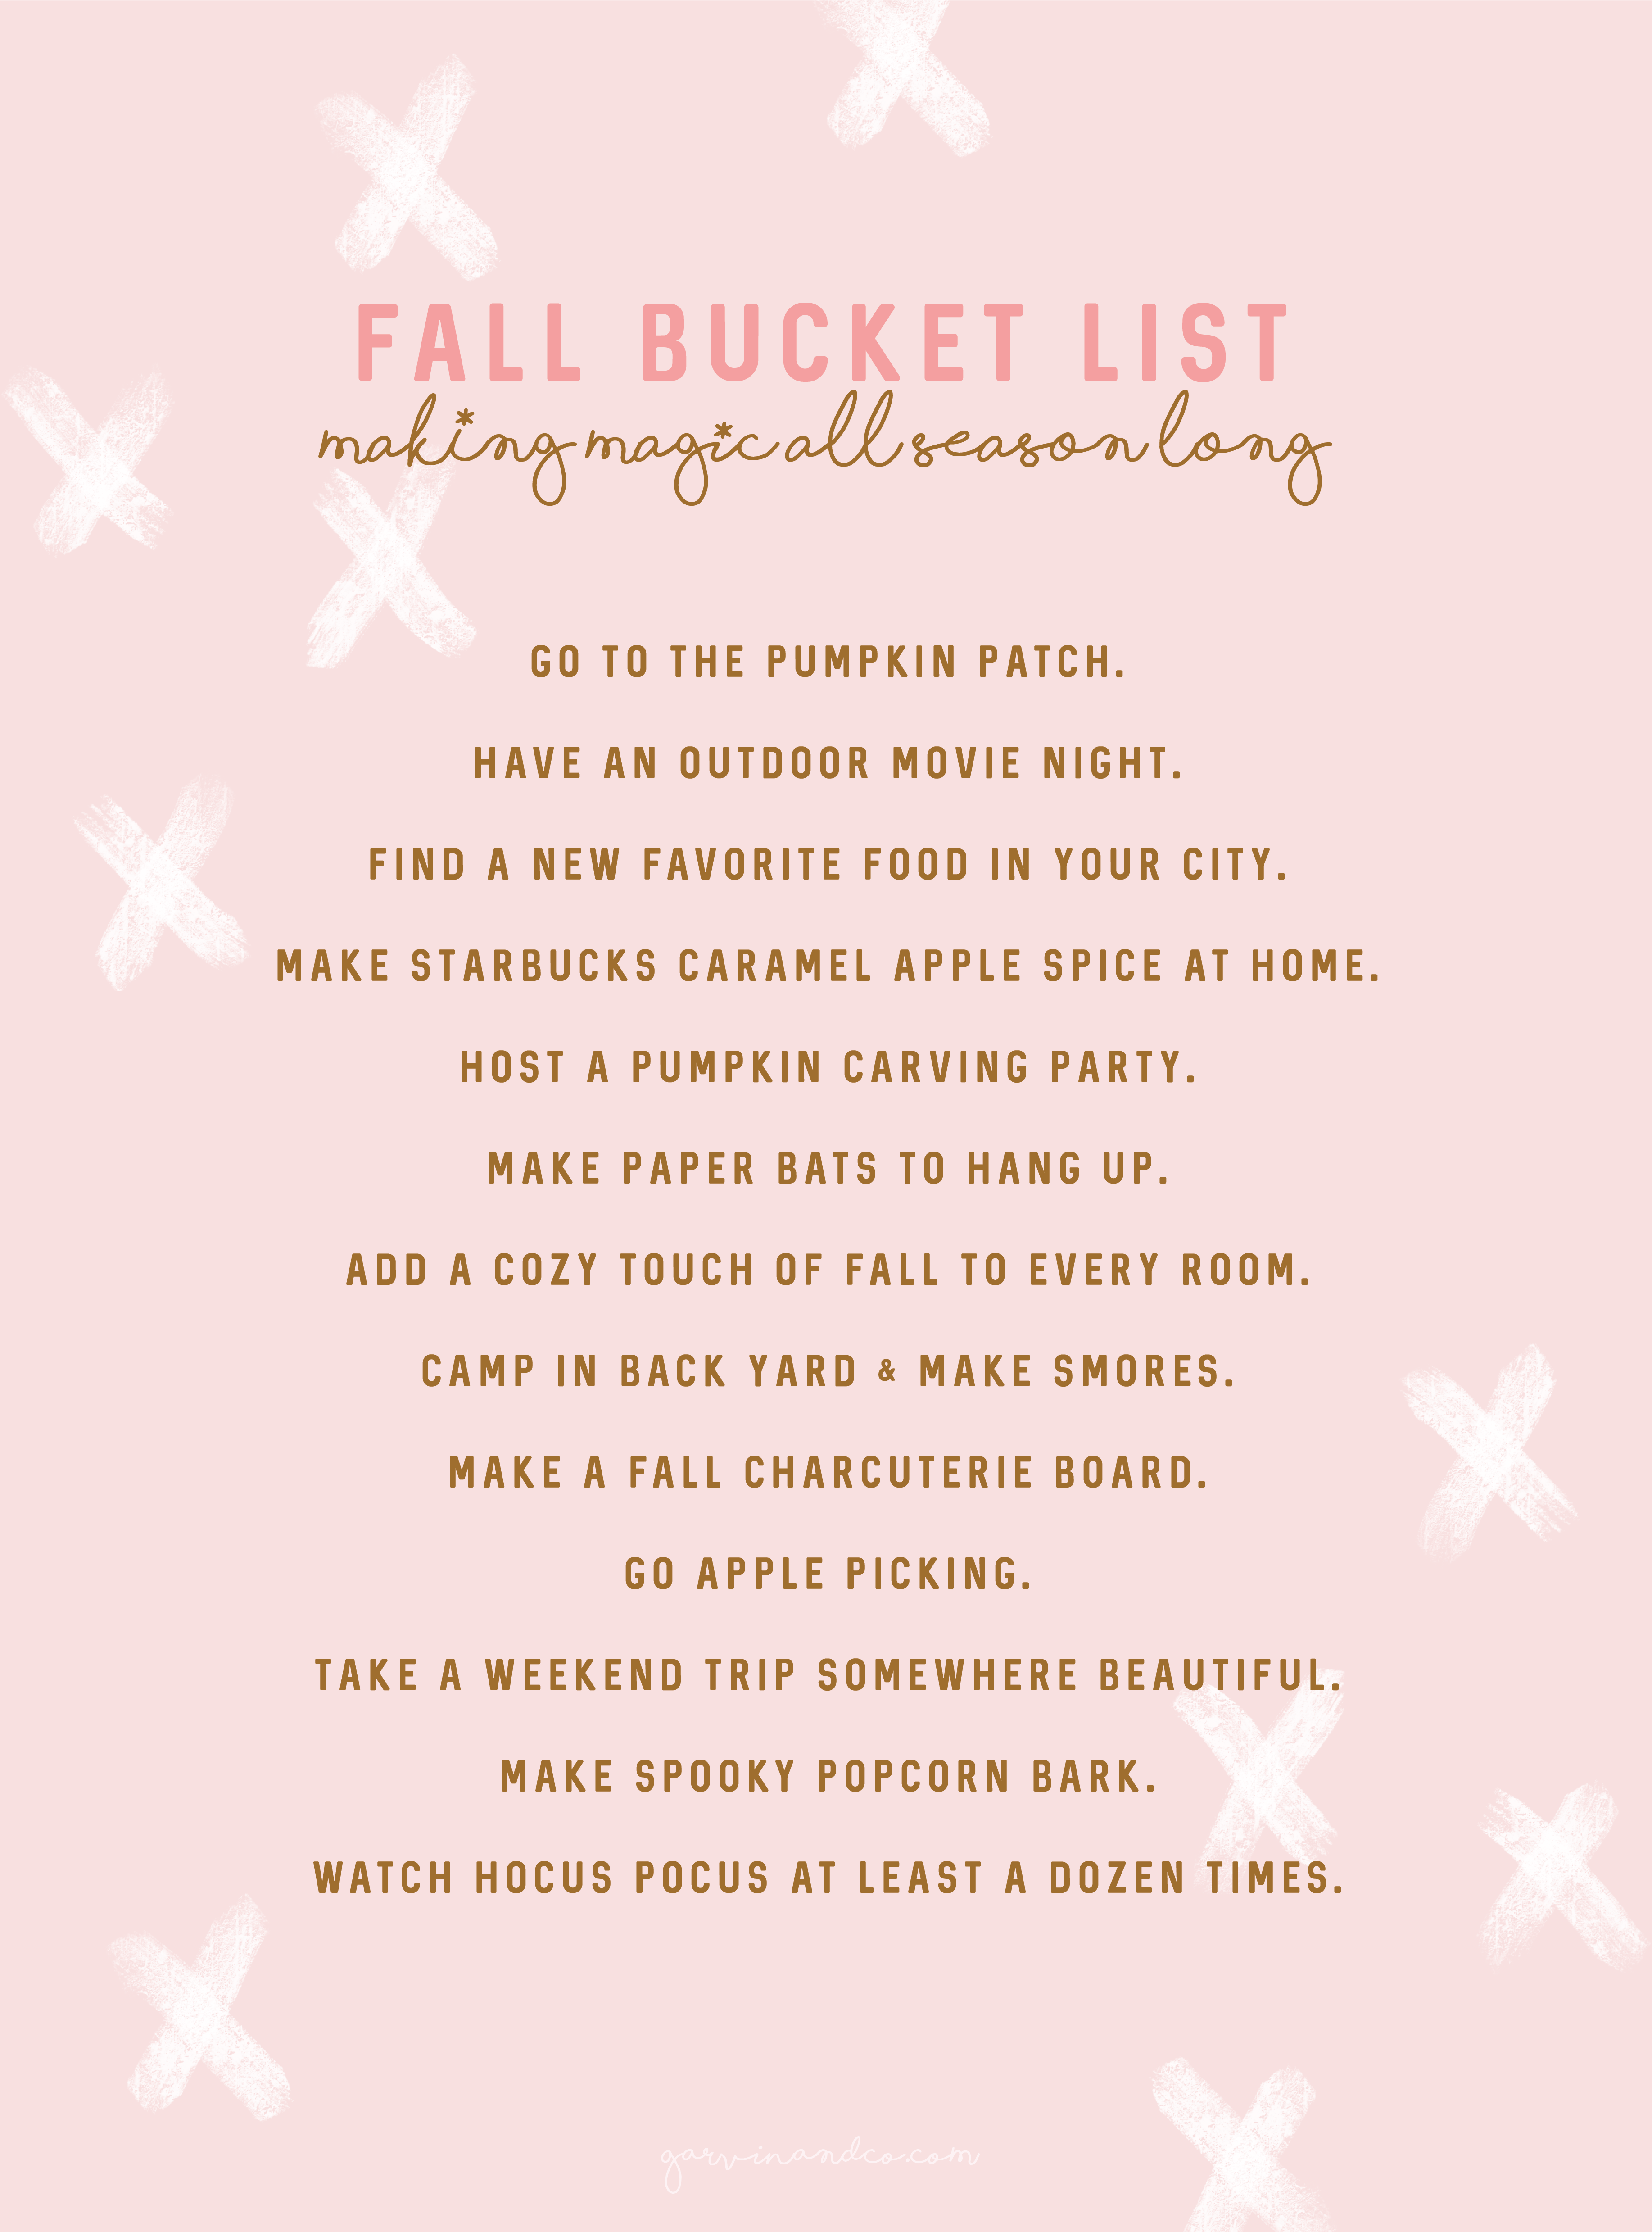 Fall Bucket List 2019